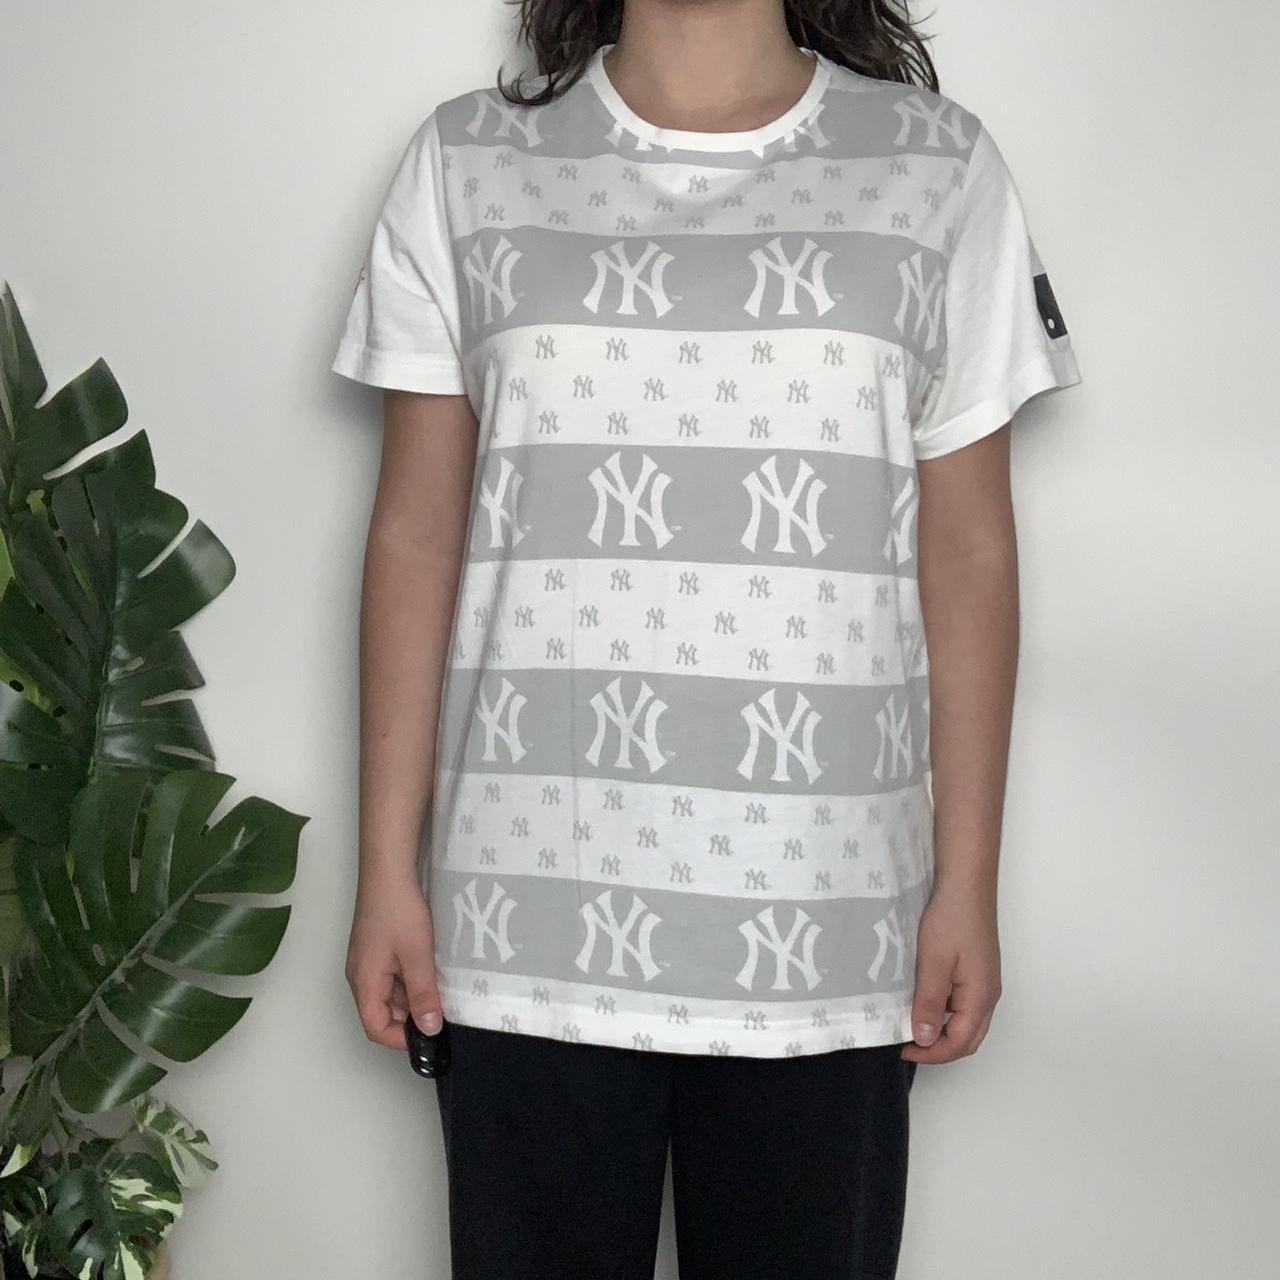 Louis Vuitton Vintage Monogram Print T-Shirt